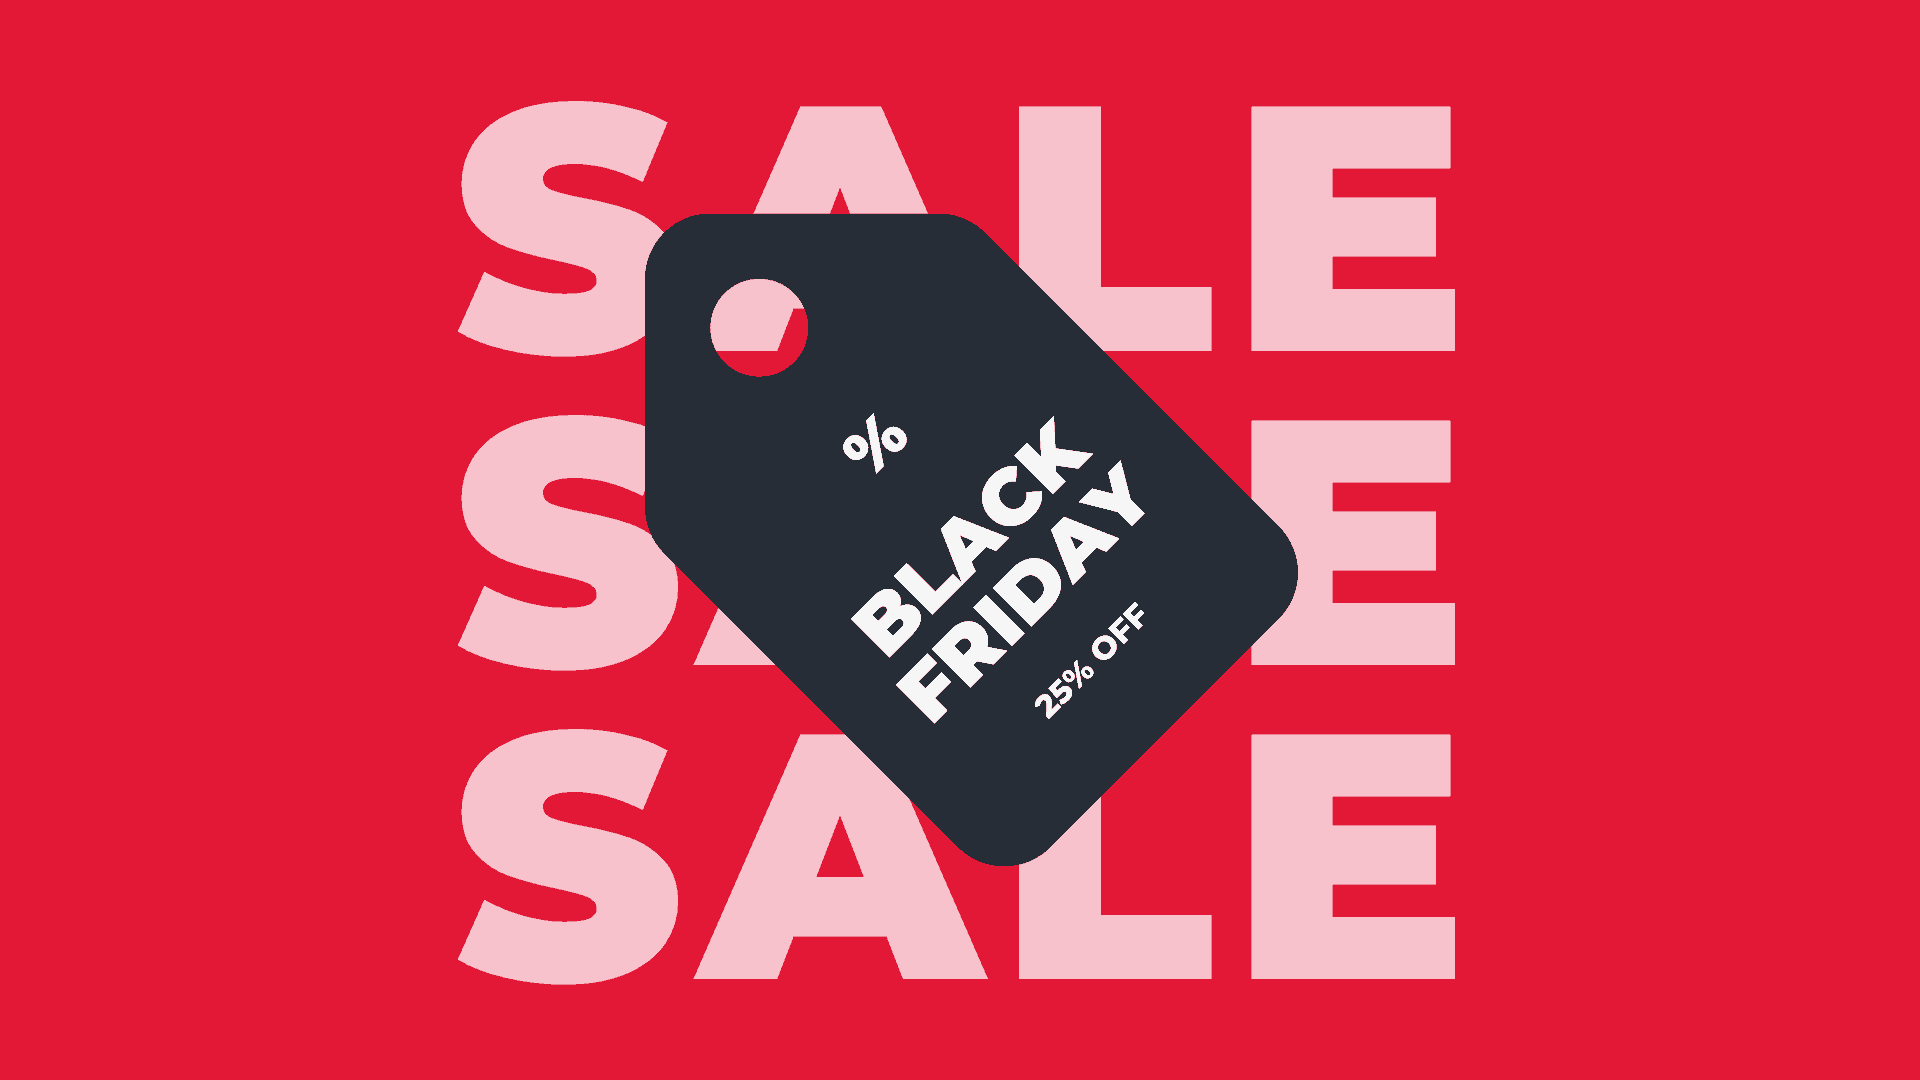 Black Friday sales tag